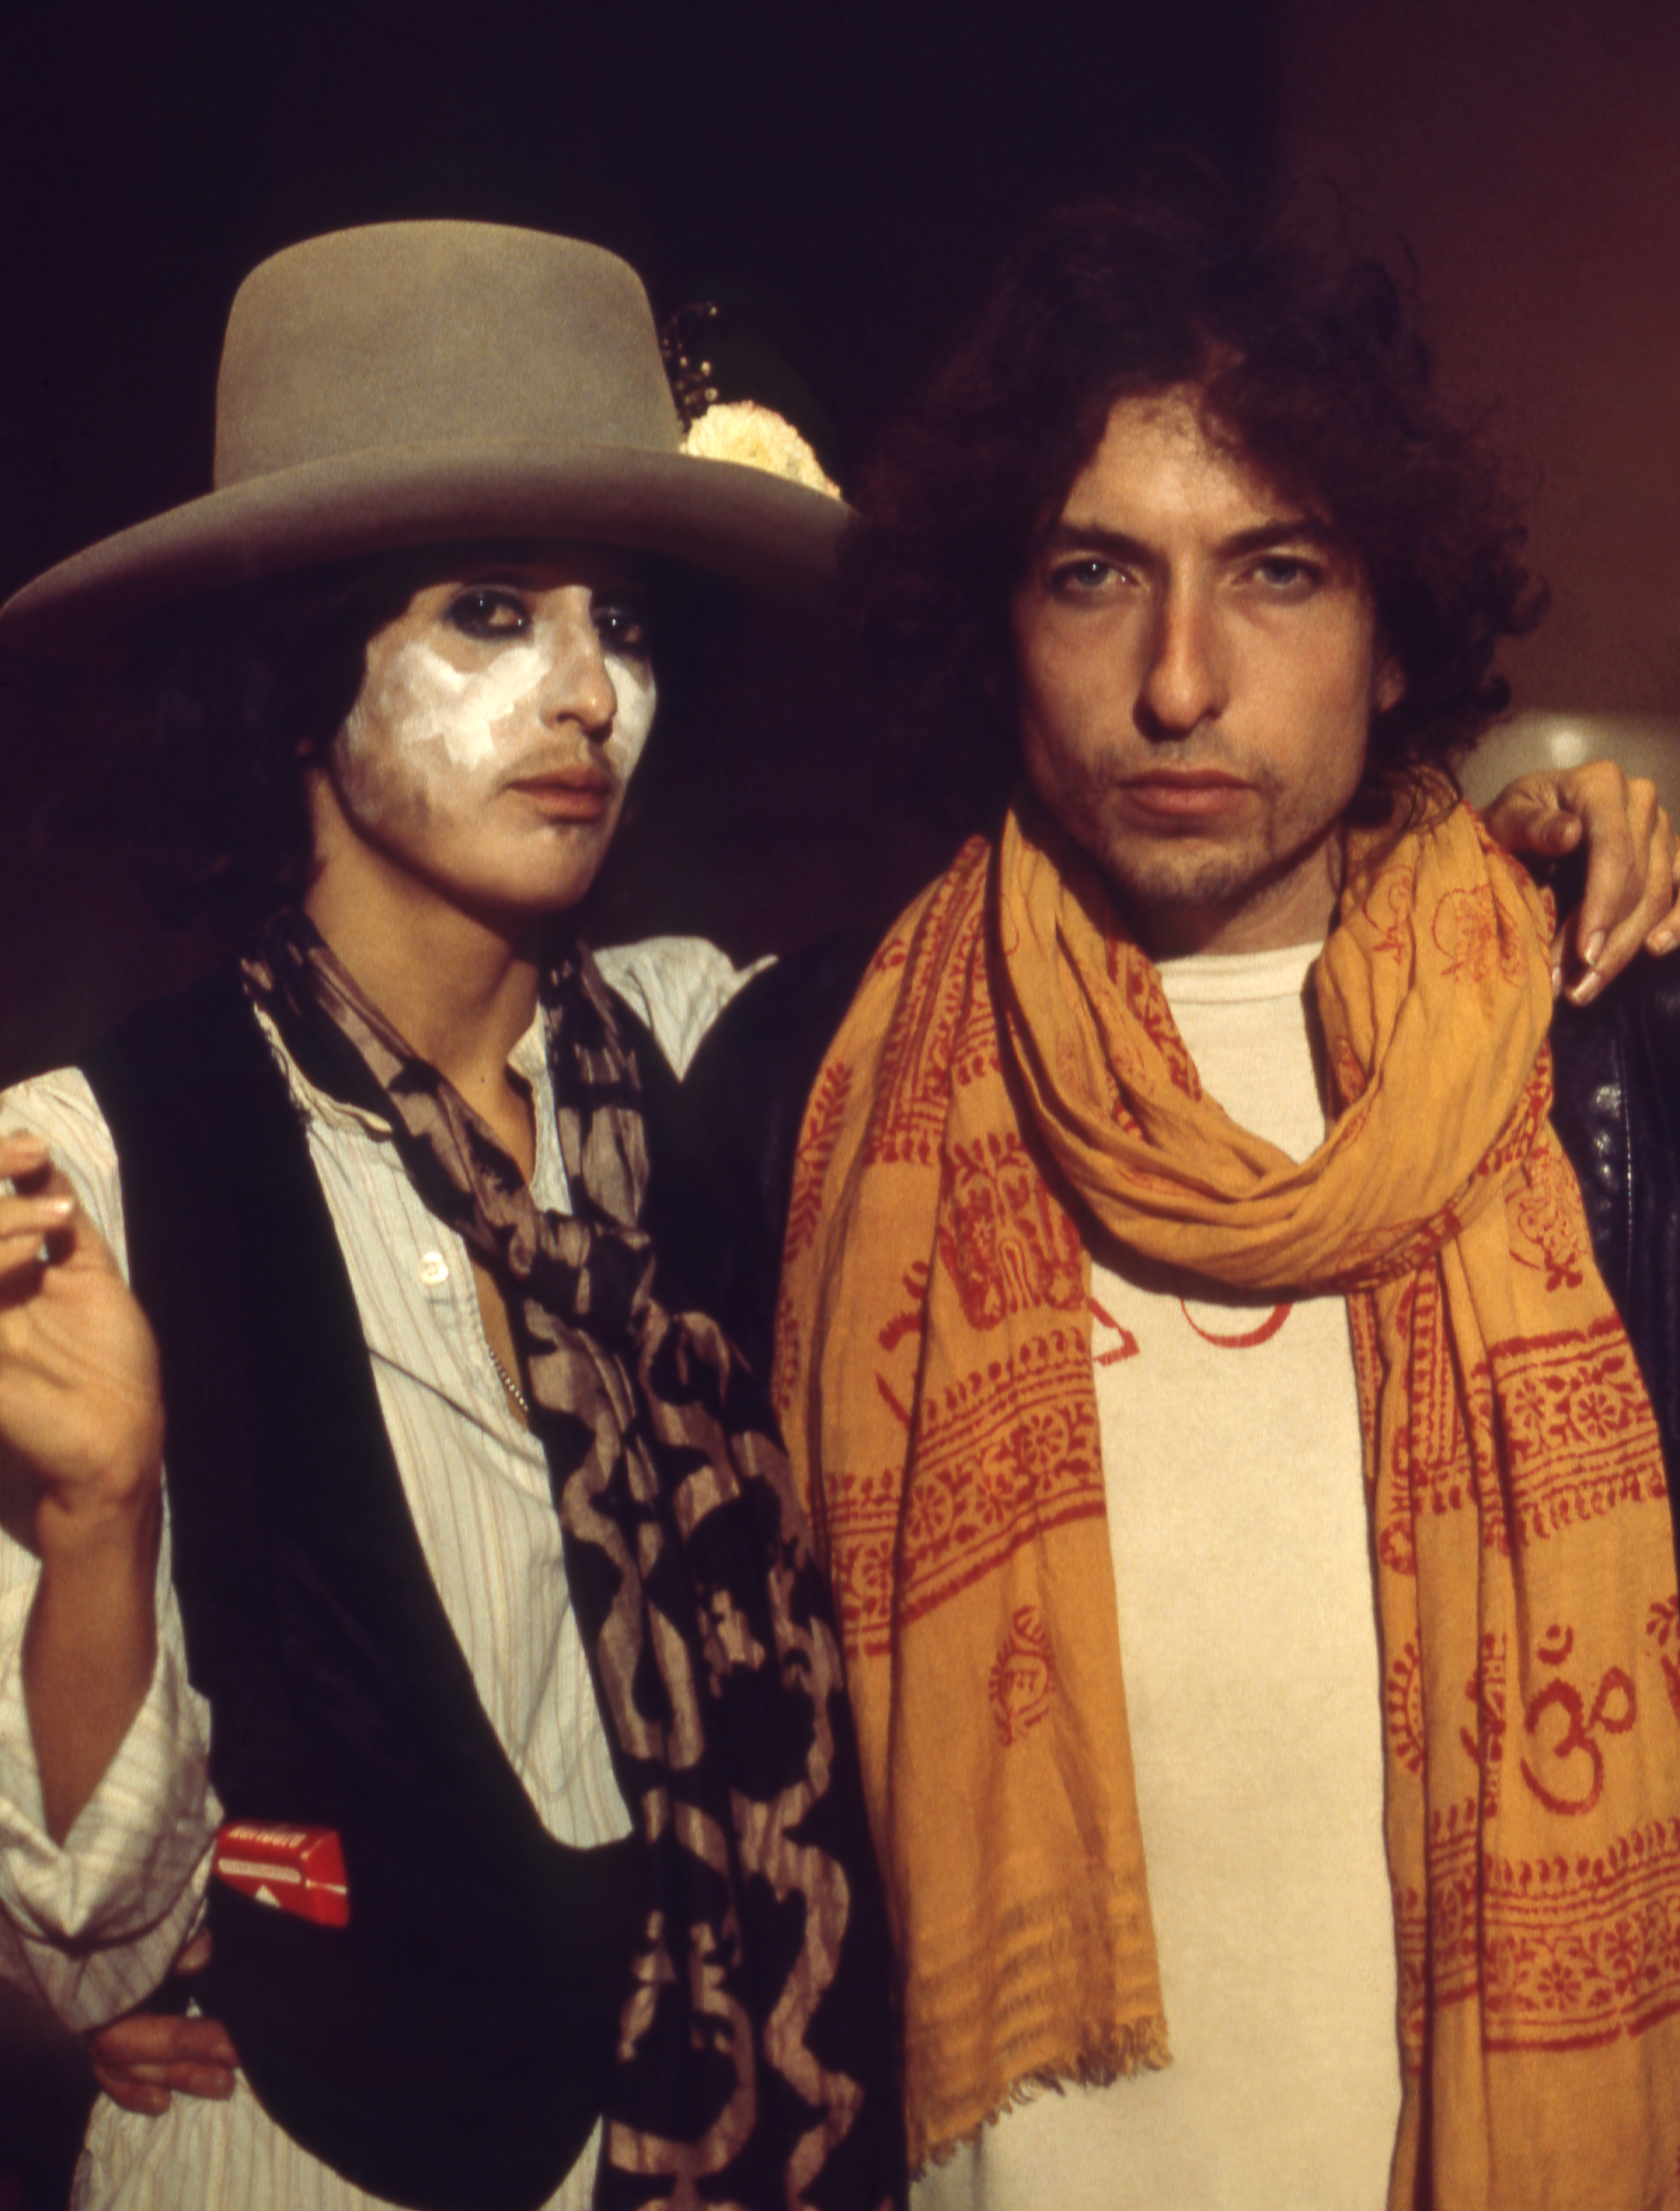 Bob Dylan's <i></p>
<p><span style=